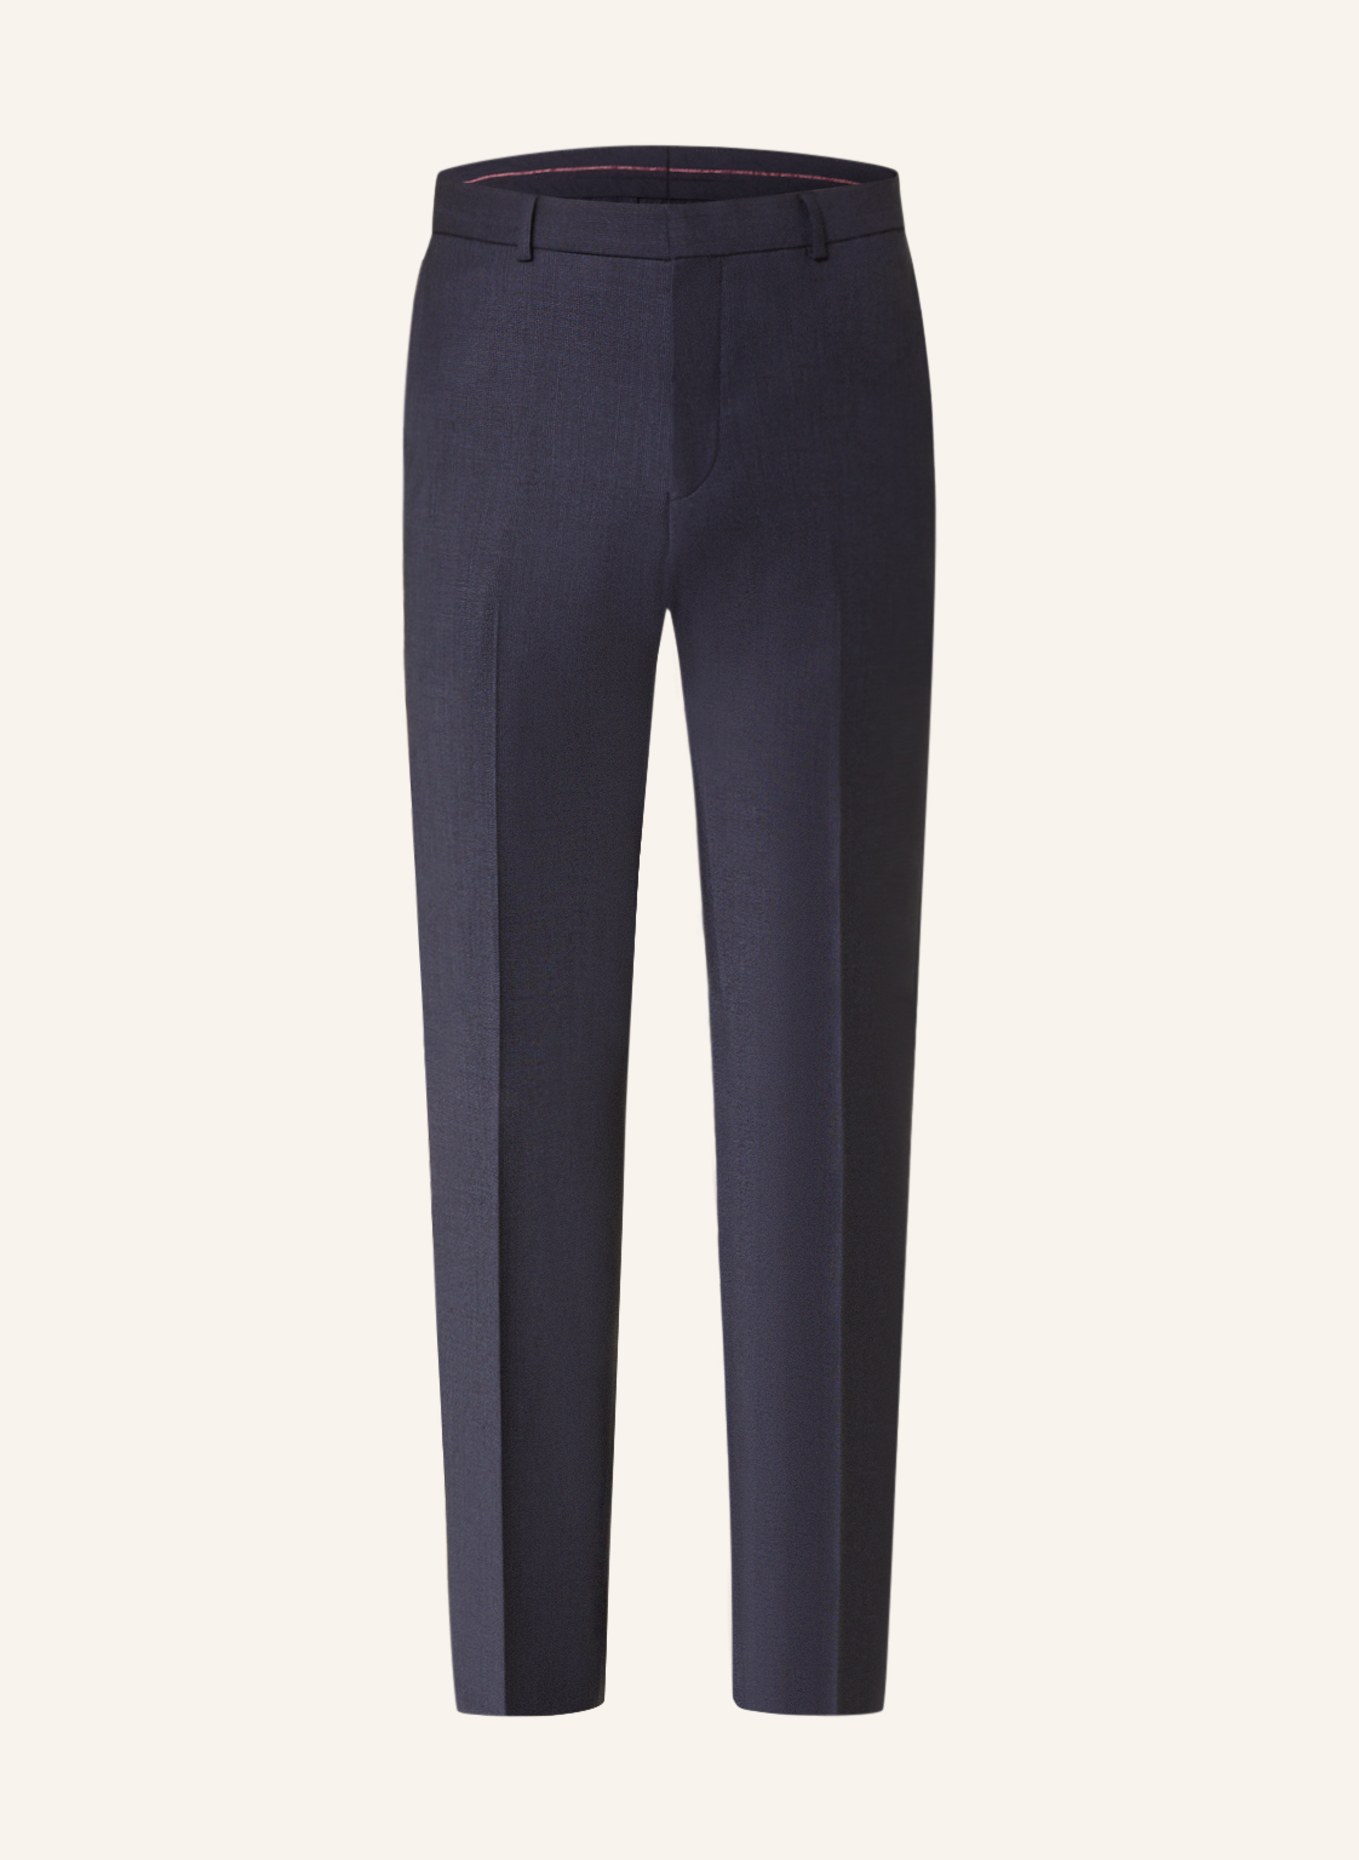 TED BAKER Anzughose FORBYTS Slim Fit, Farbe: NAVY NAVY (Bild 1)